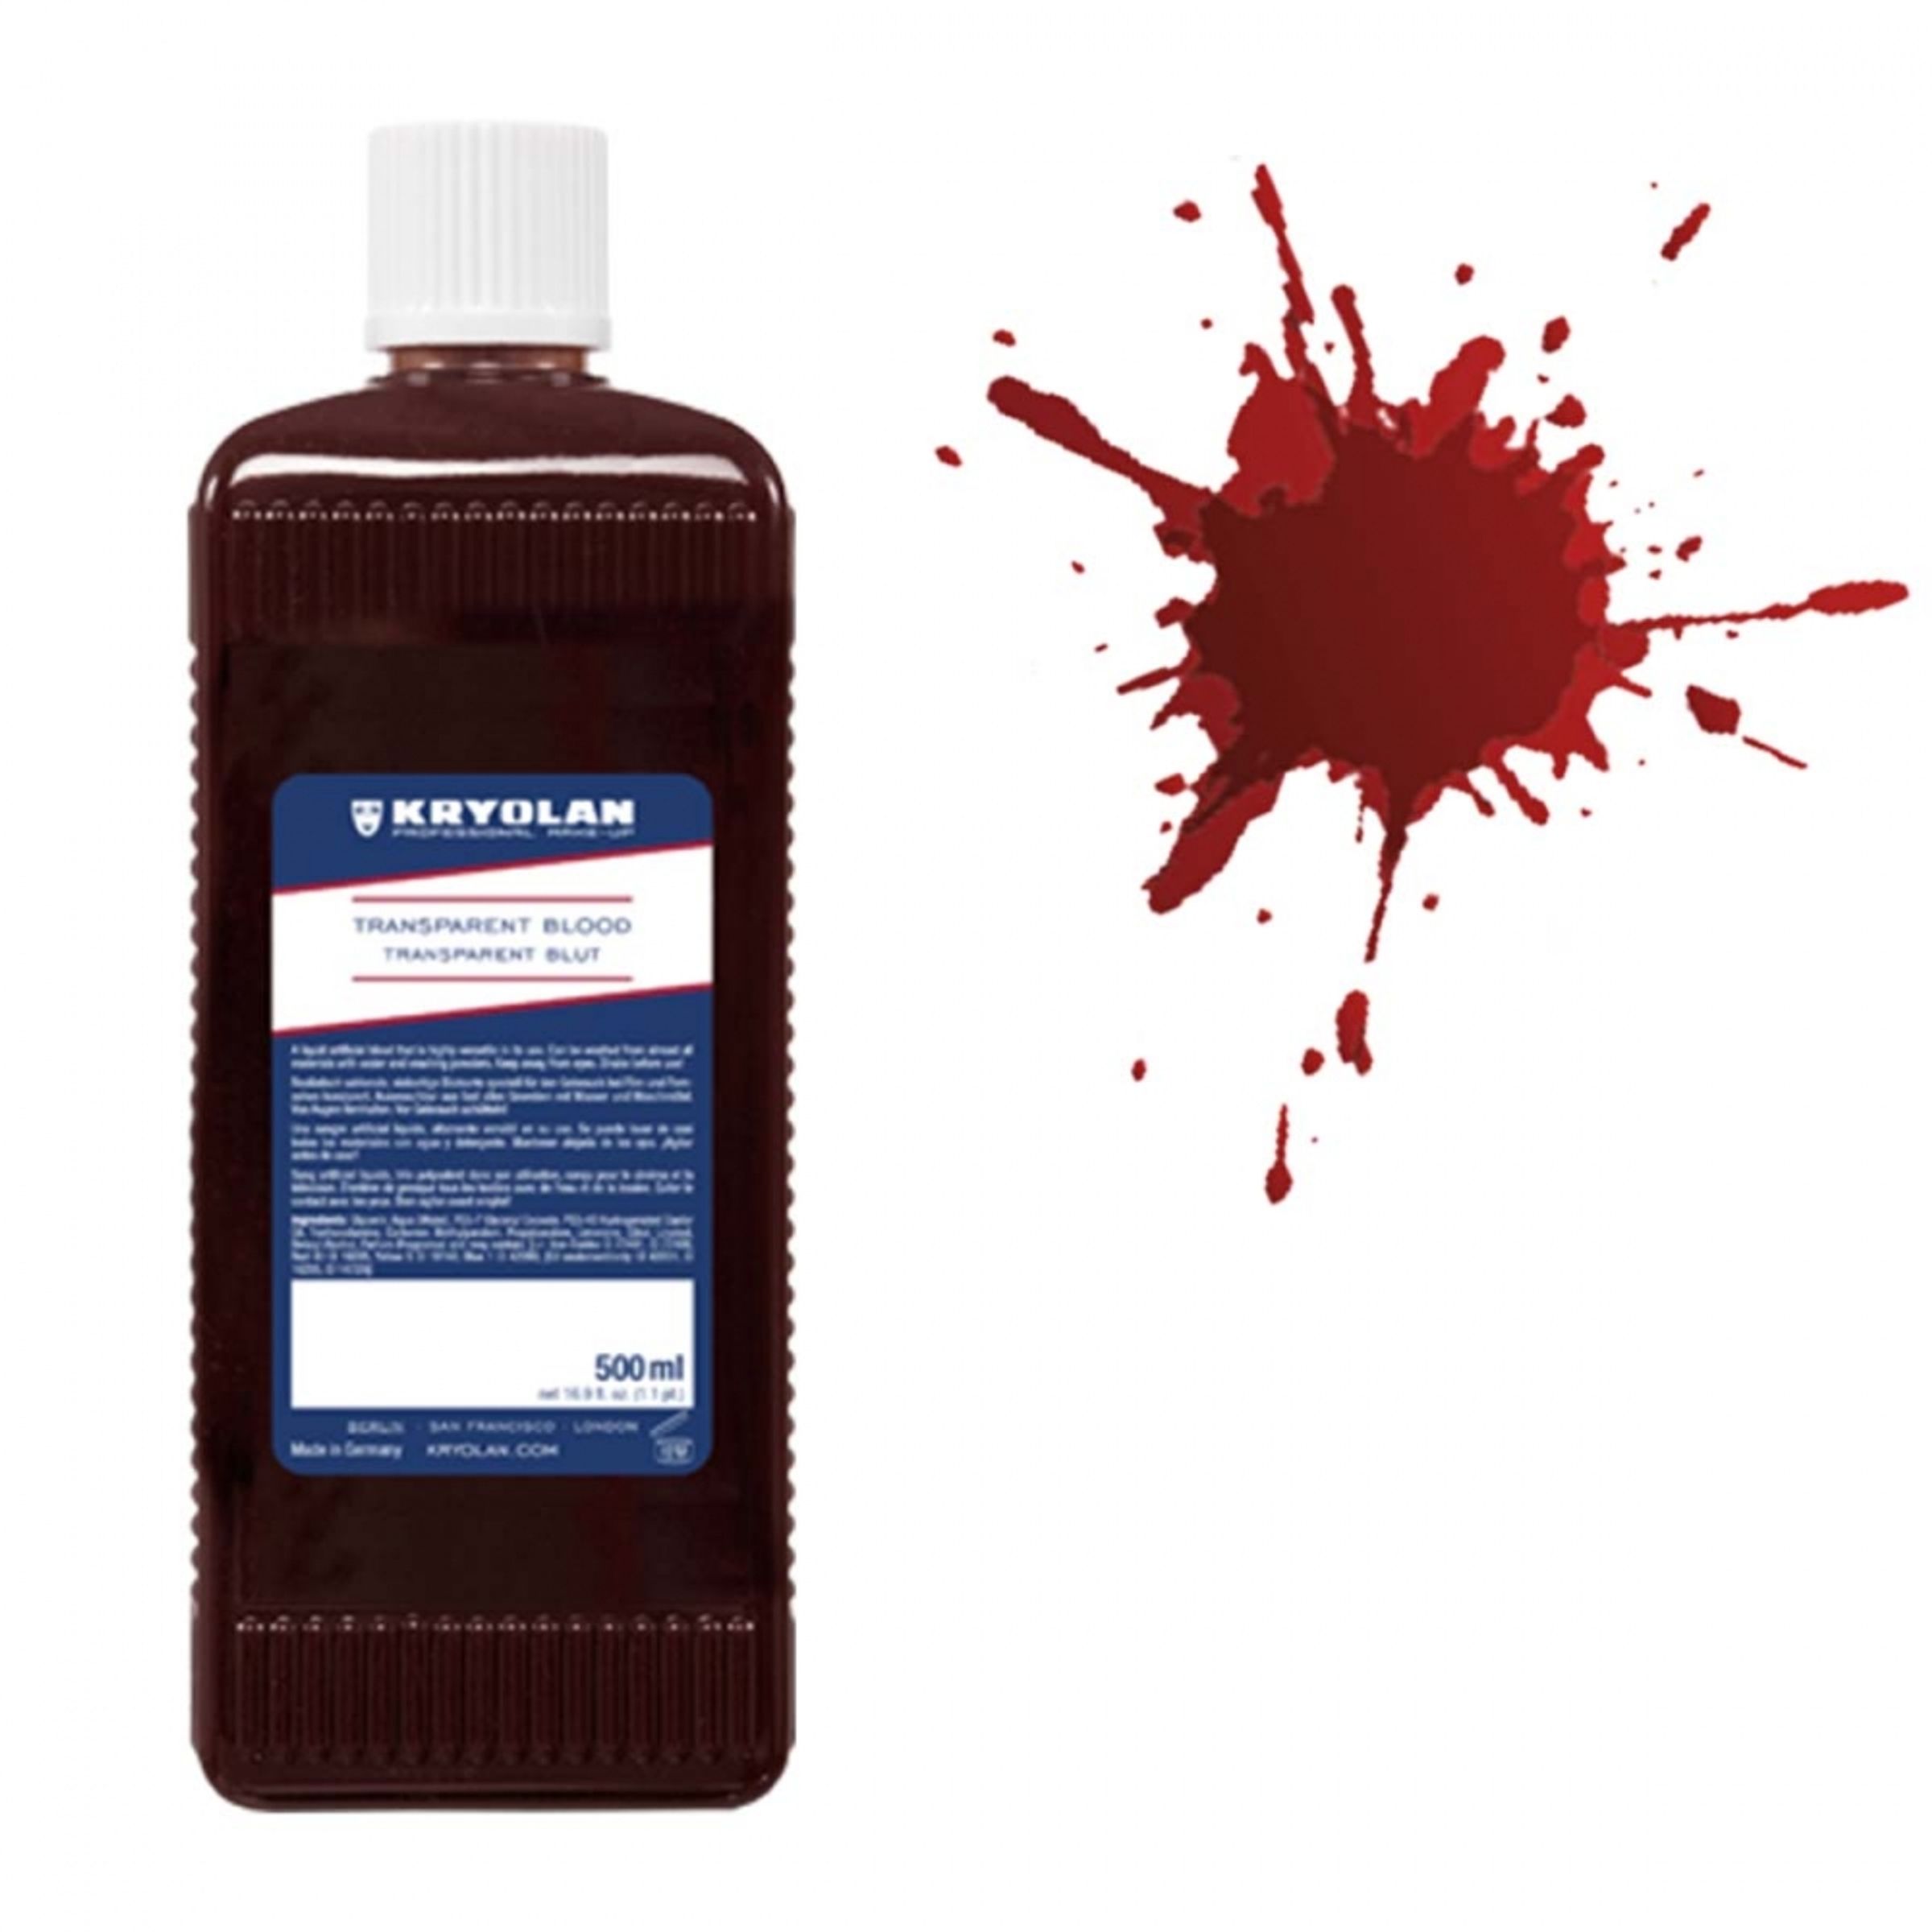 Kryolan Transparent Blod - 500 ml Medium